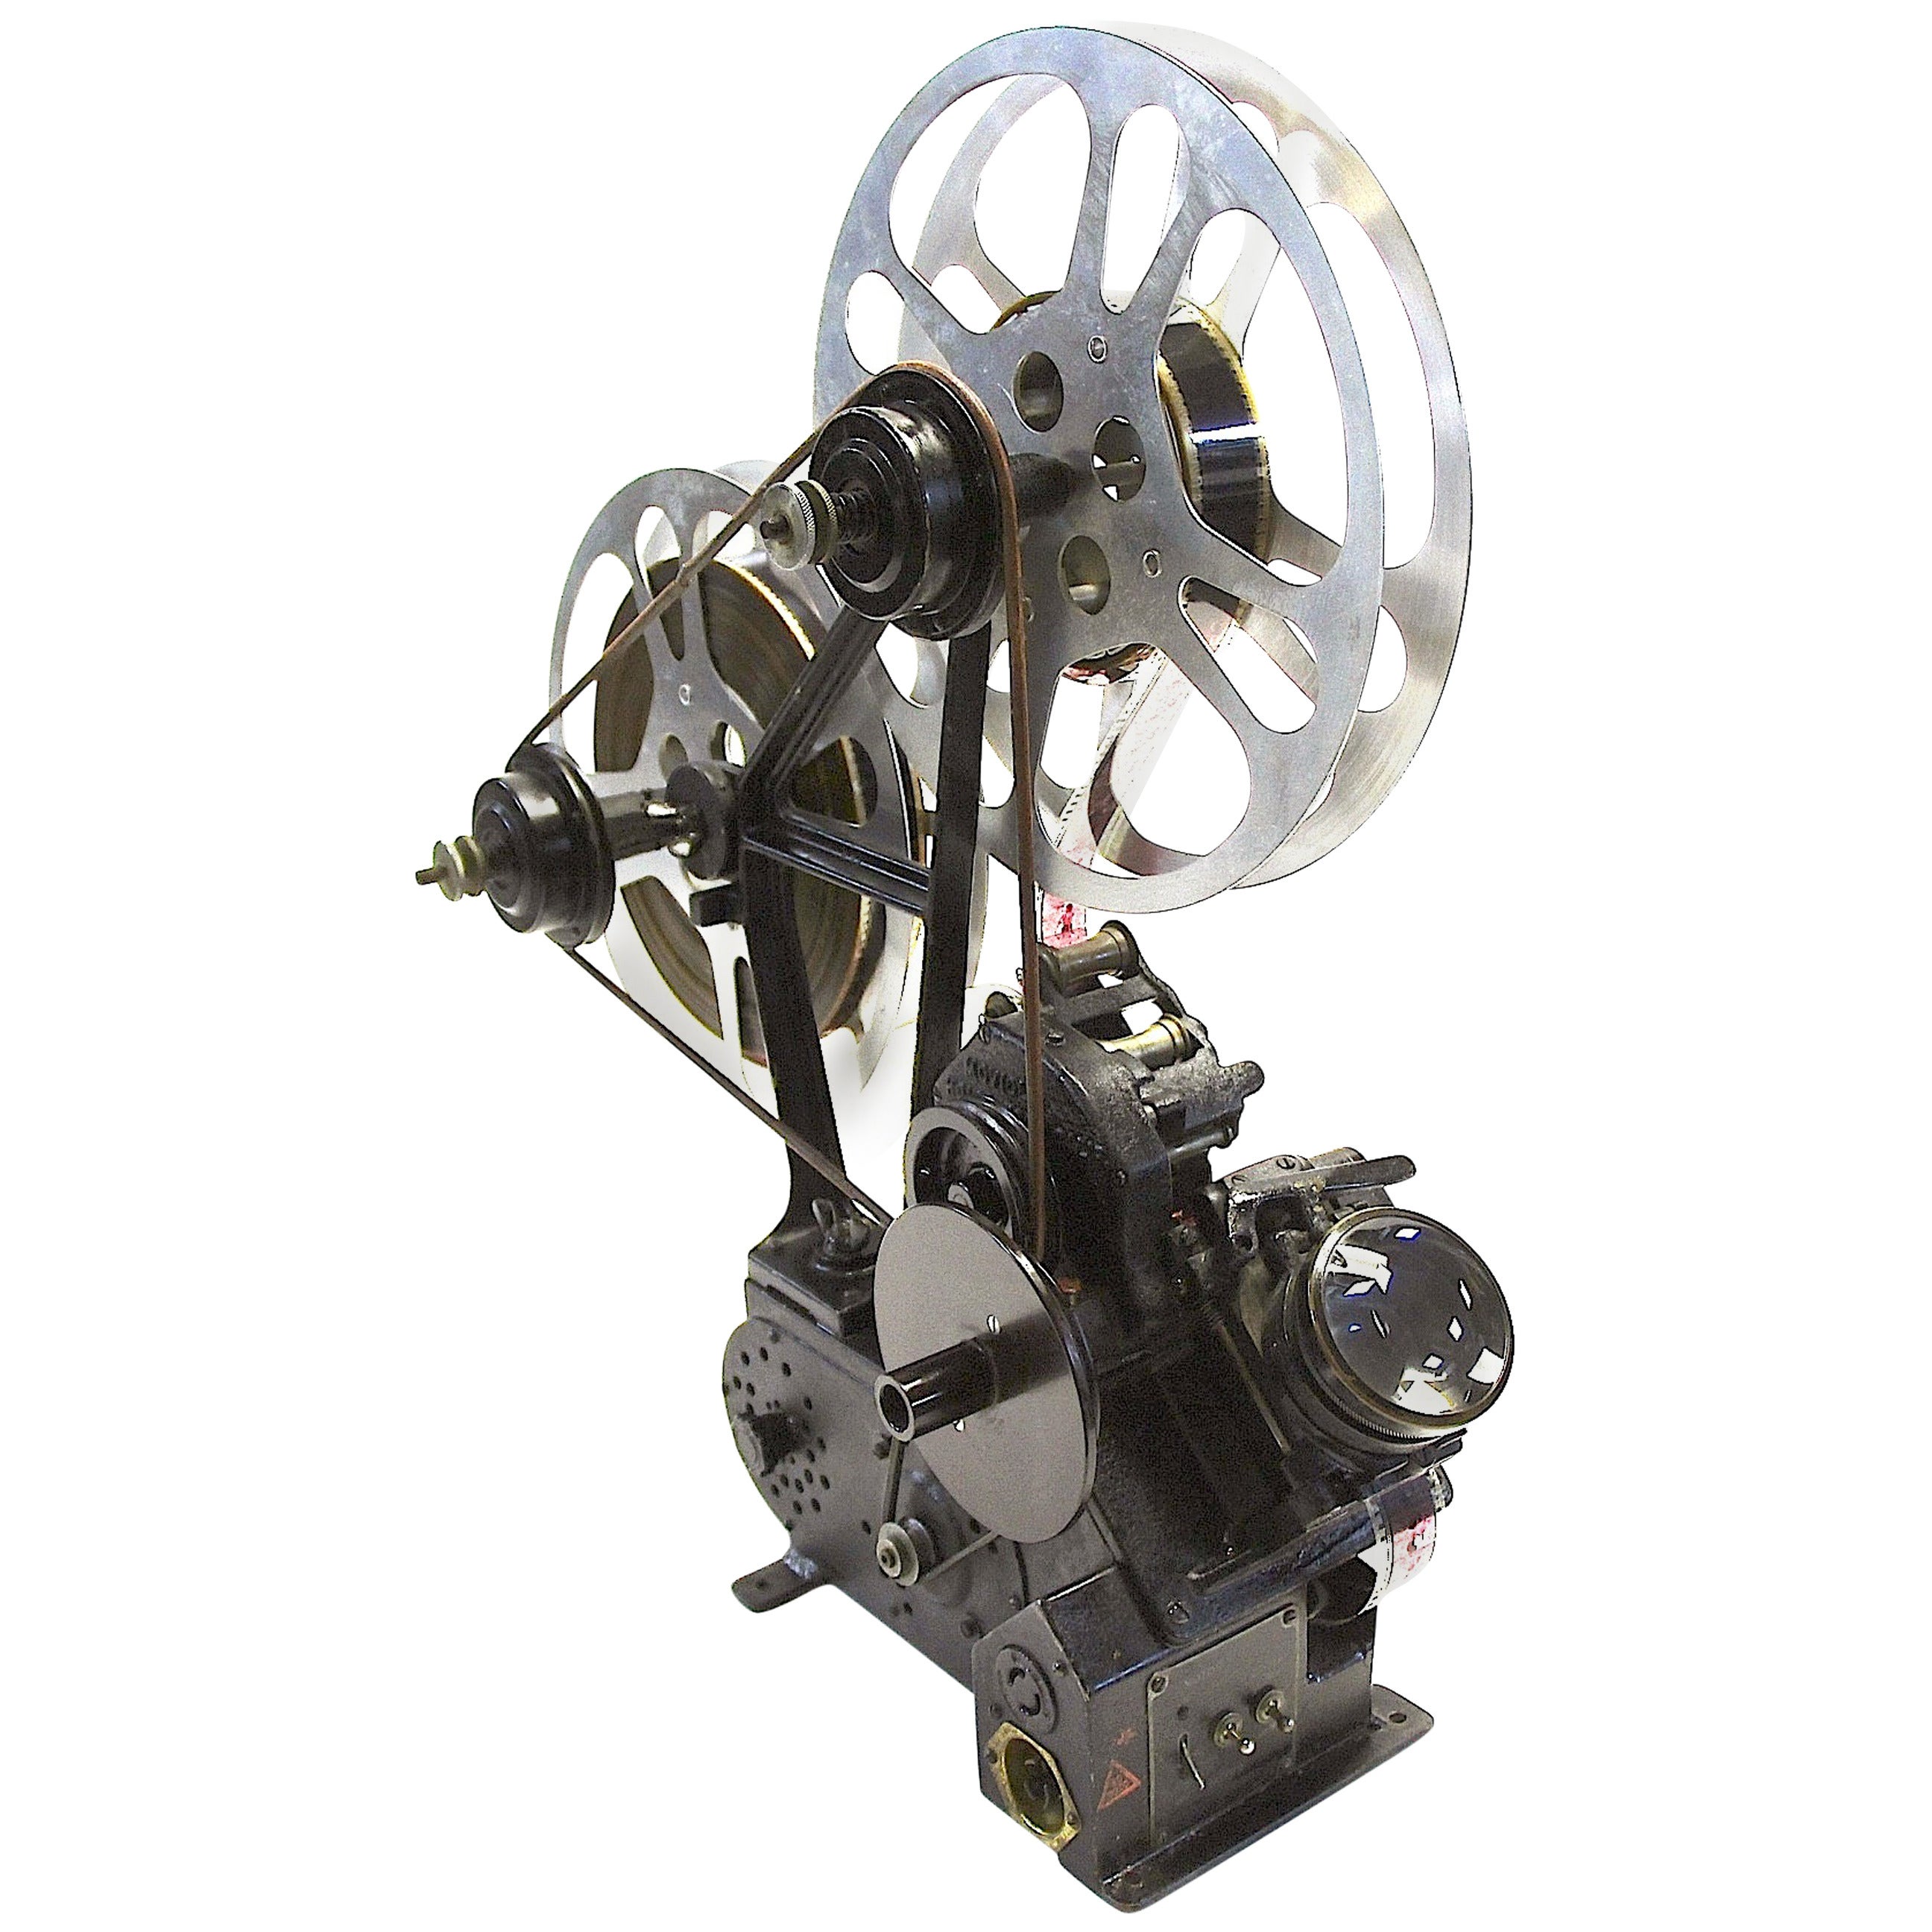 Moviola Bullseye 35mm Film Editing Viewer Designed 1919 Built in 1932, Sculpture For Sale